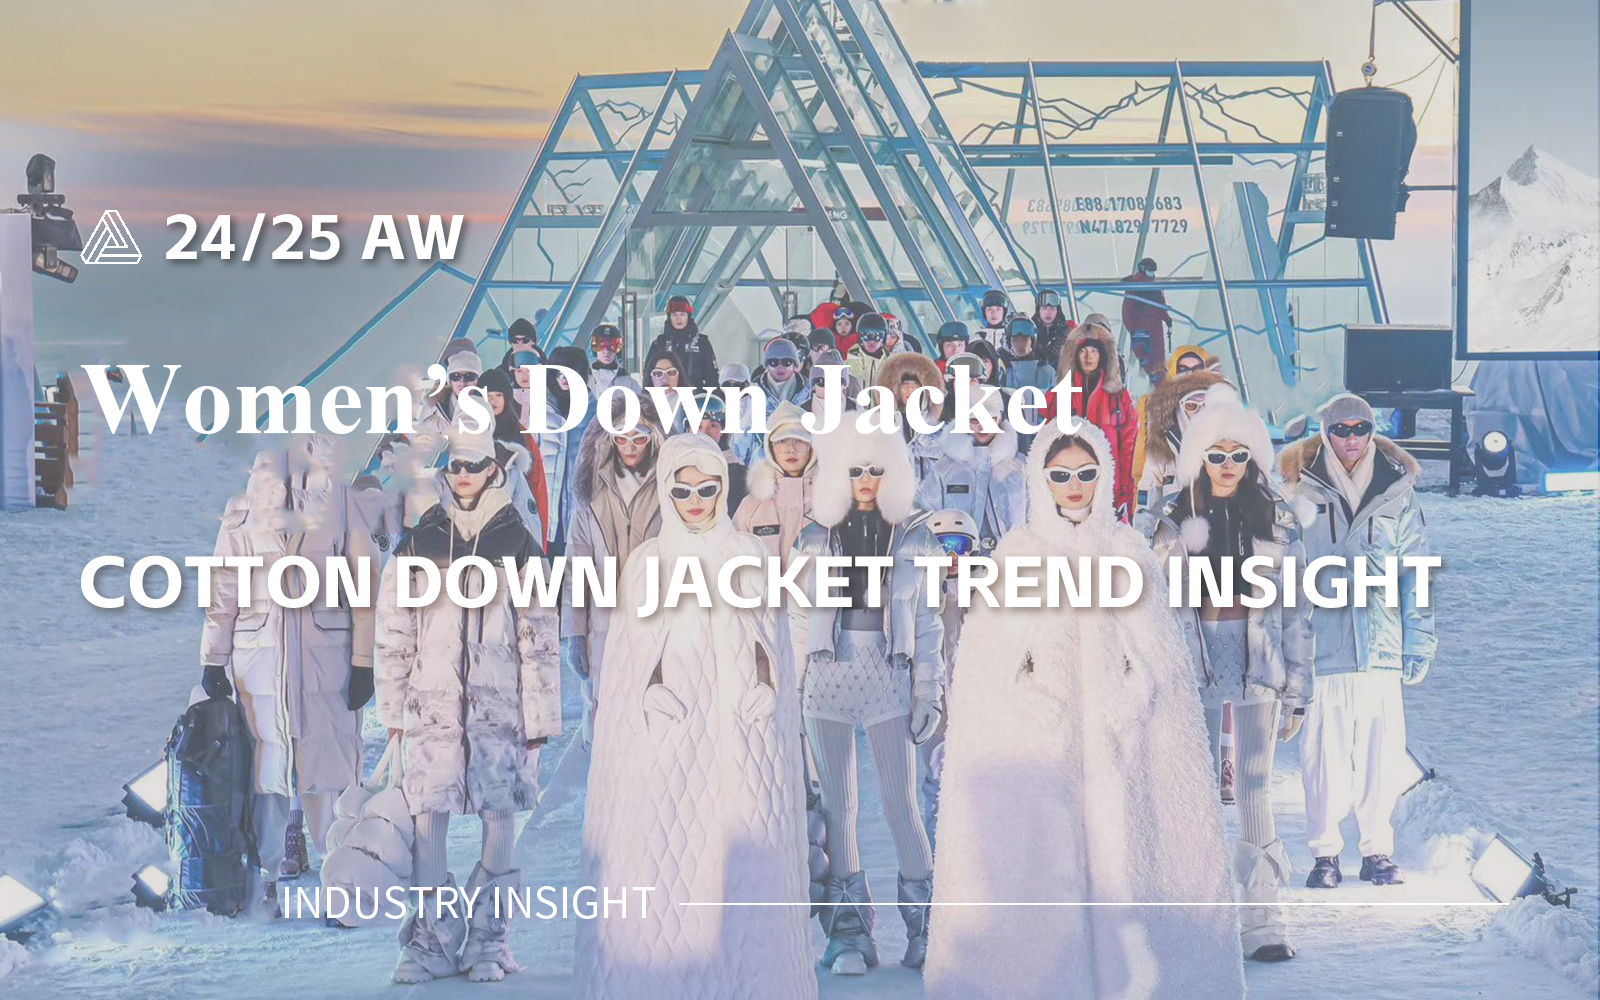 A/W 24/25 Industry Insight of Women's Down Jacket